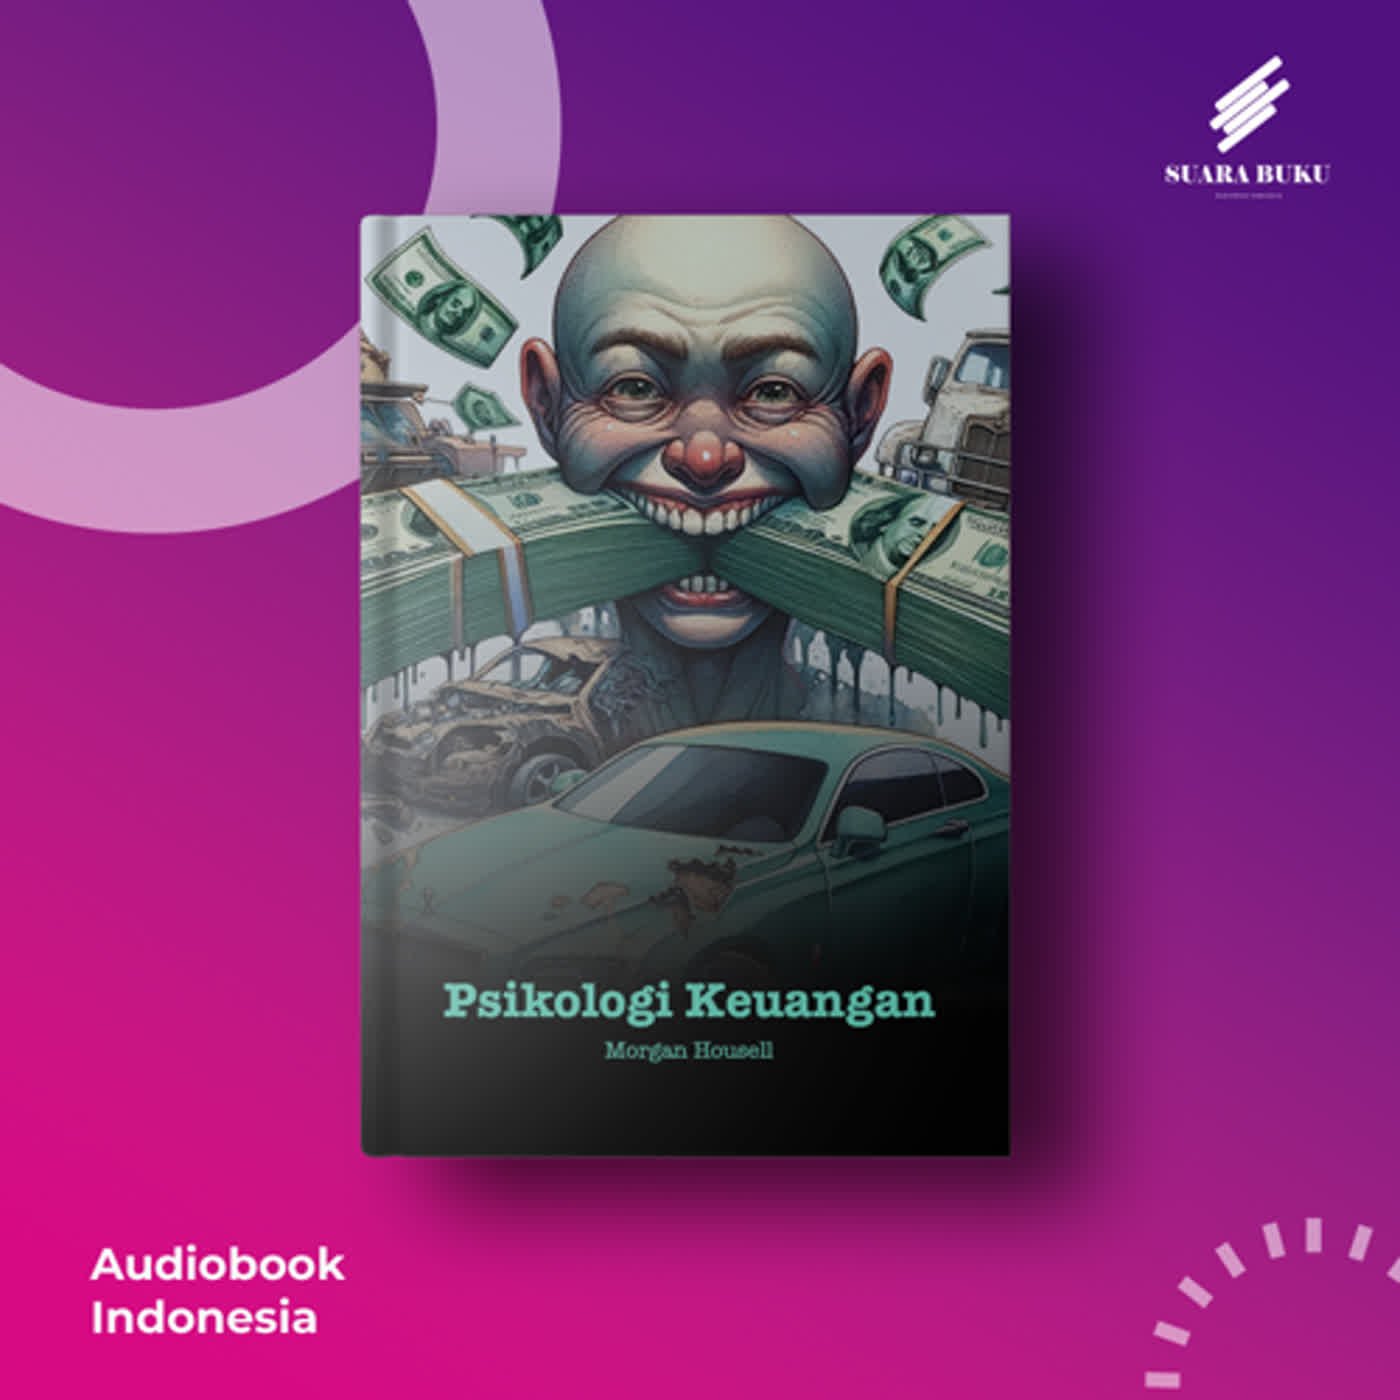 #4 Psikologi Keuangan Karya Morgan Housell - Audiobook Indonesia Suara Buku